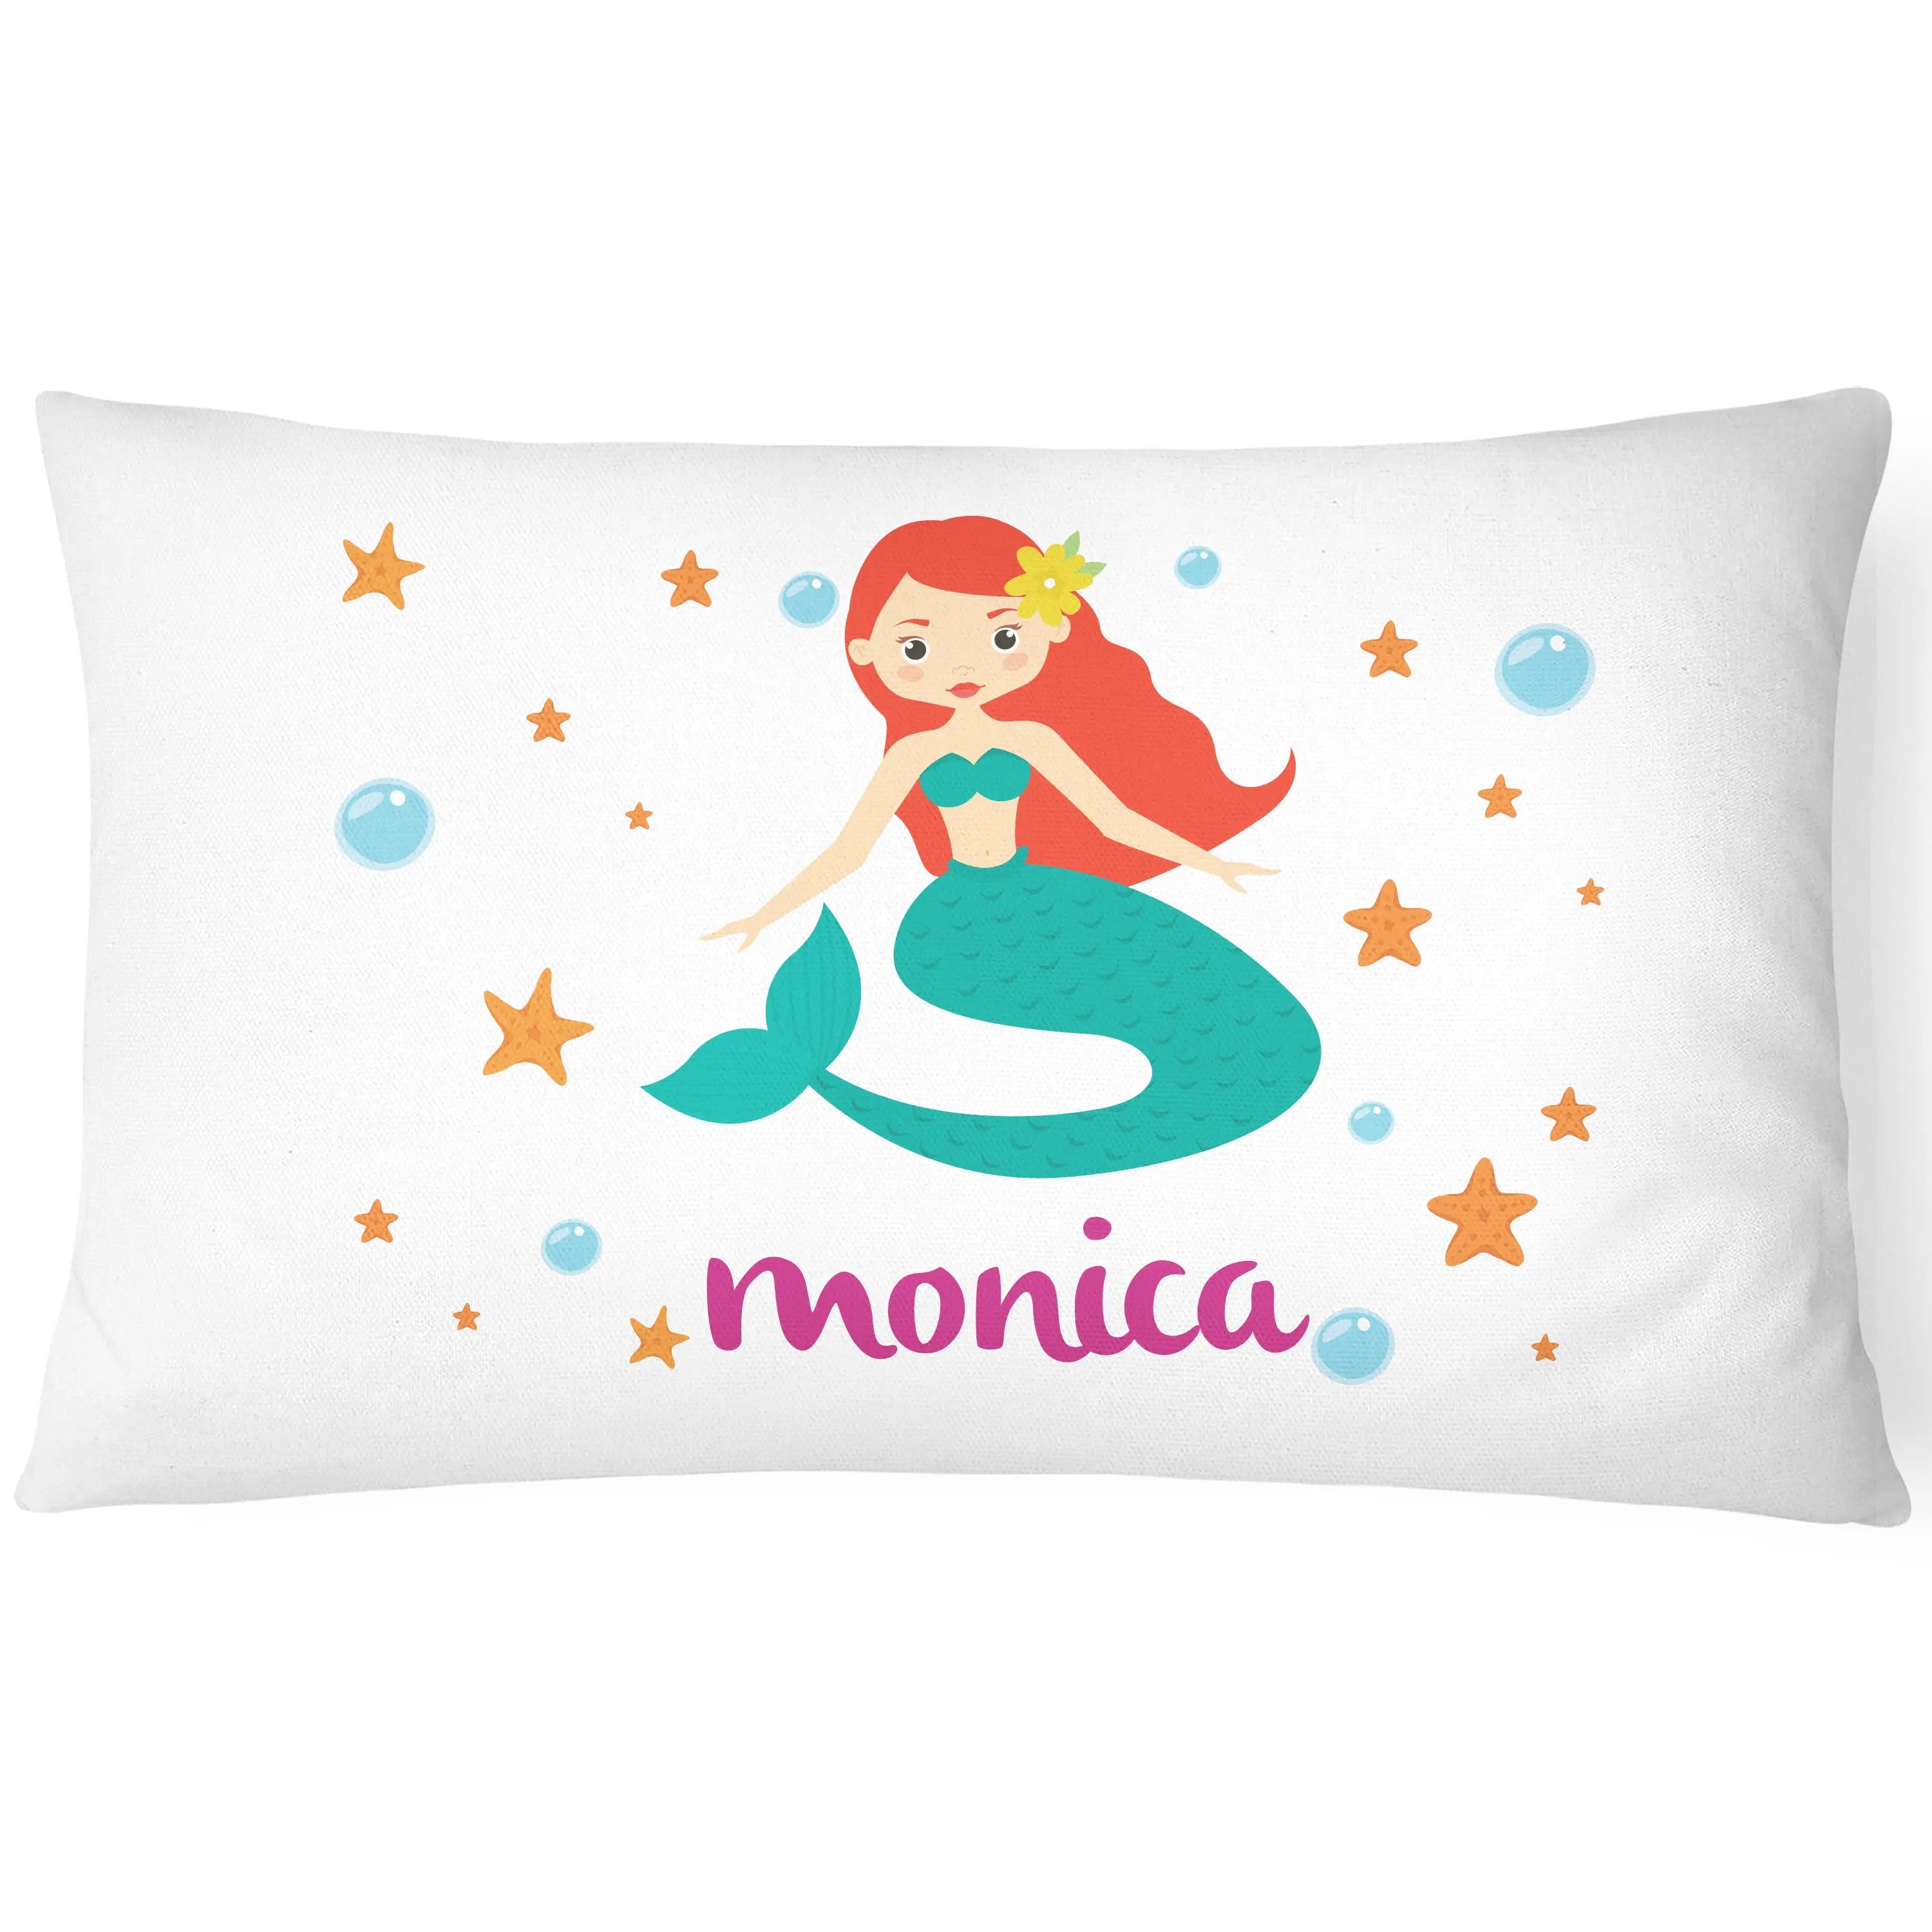 Personalised Mermaid Pillowcase - Blue/Green - CushionPop